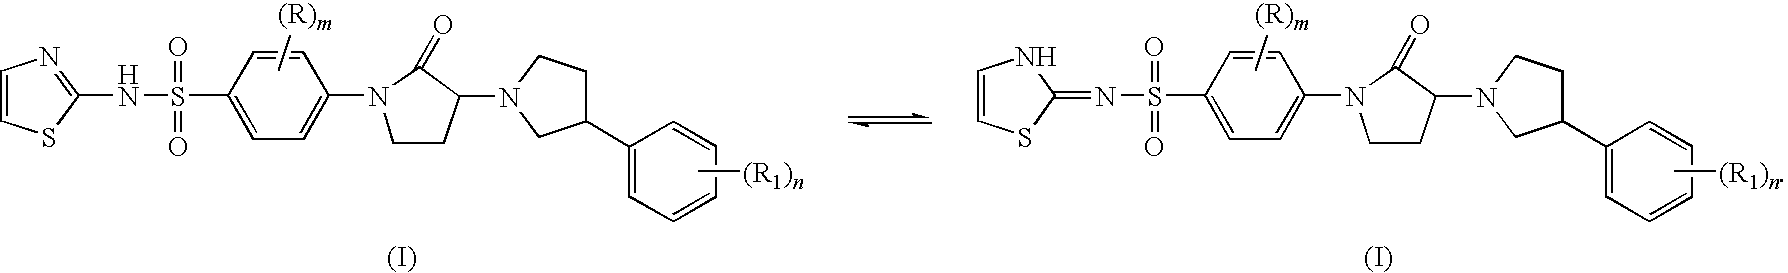 Heterocyclic derivatives as modulators of ion channels